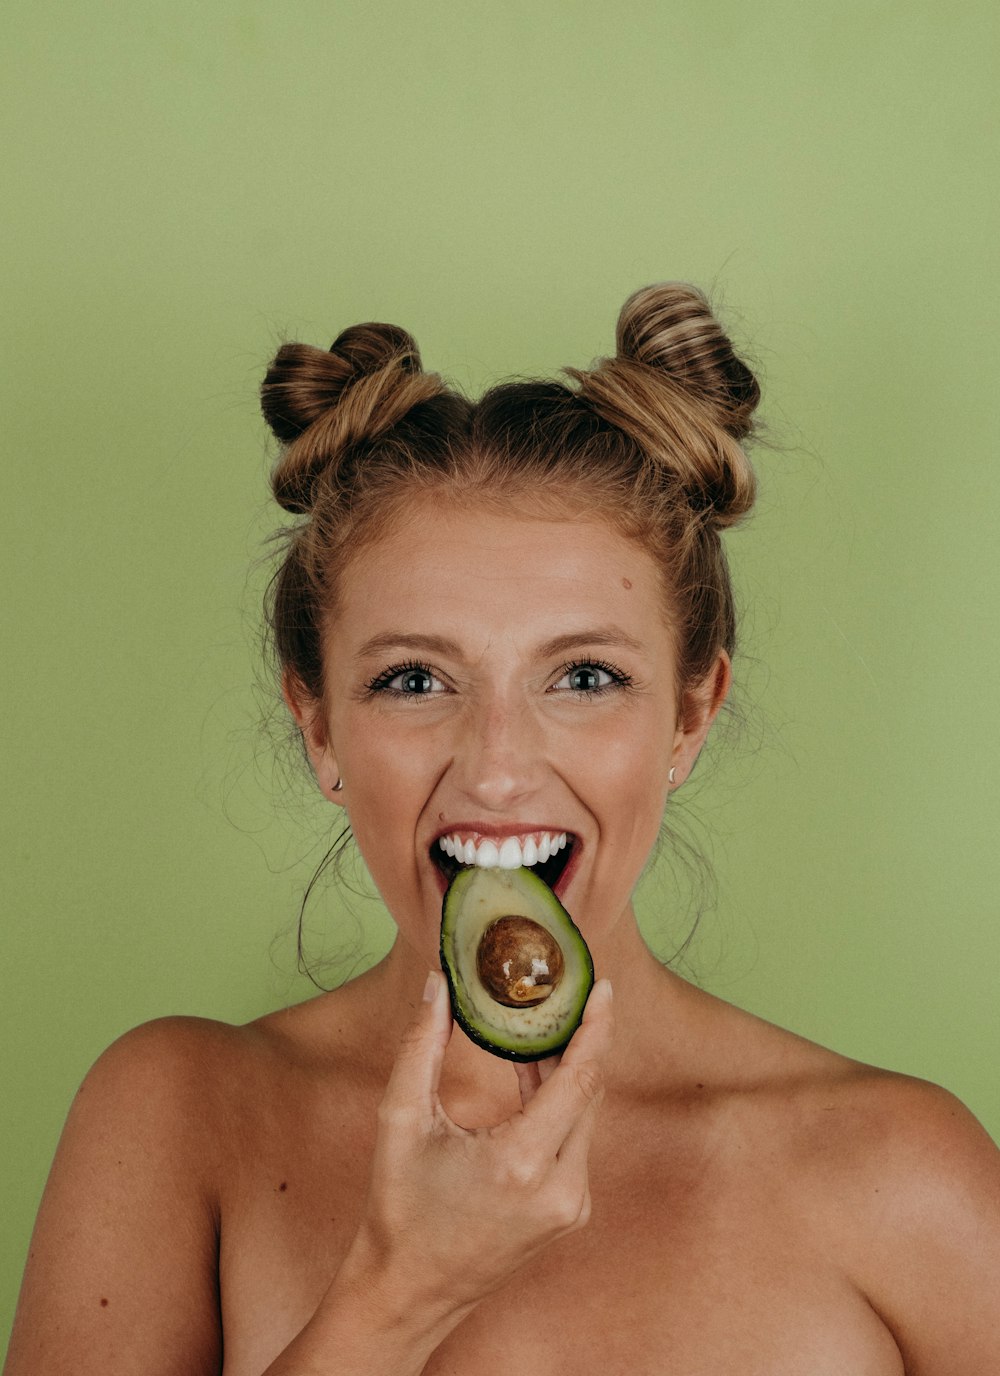 woman holding sliced avocado